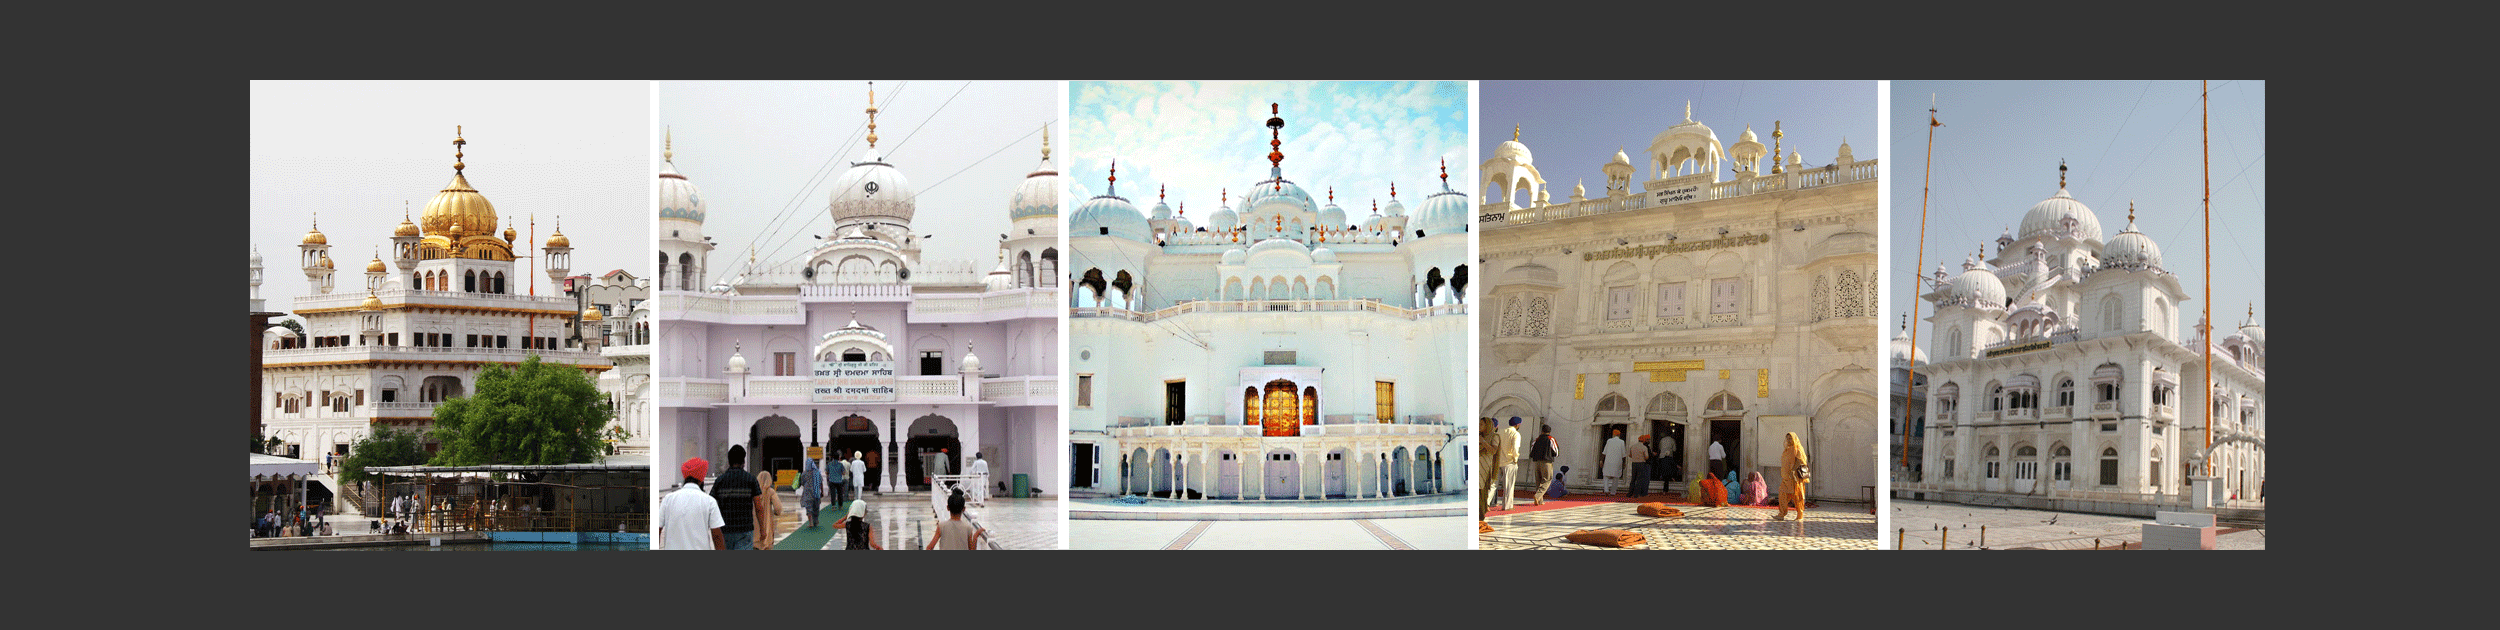 Five Takhts of Sikh Religion